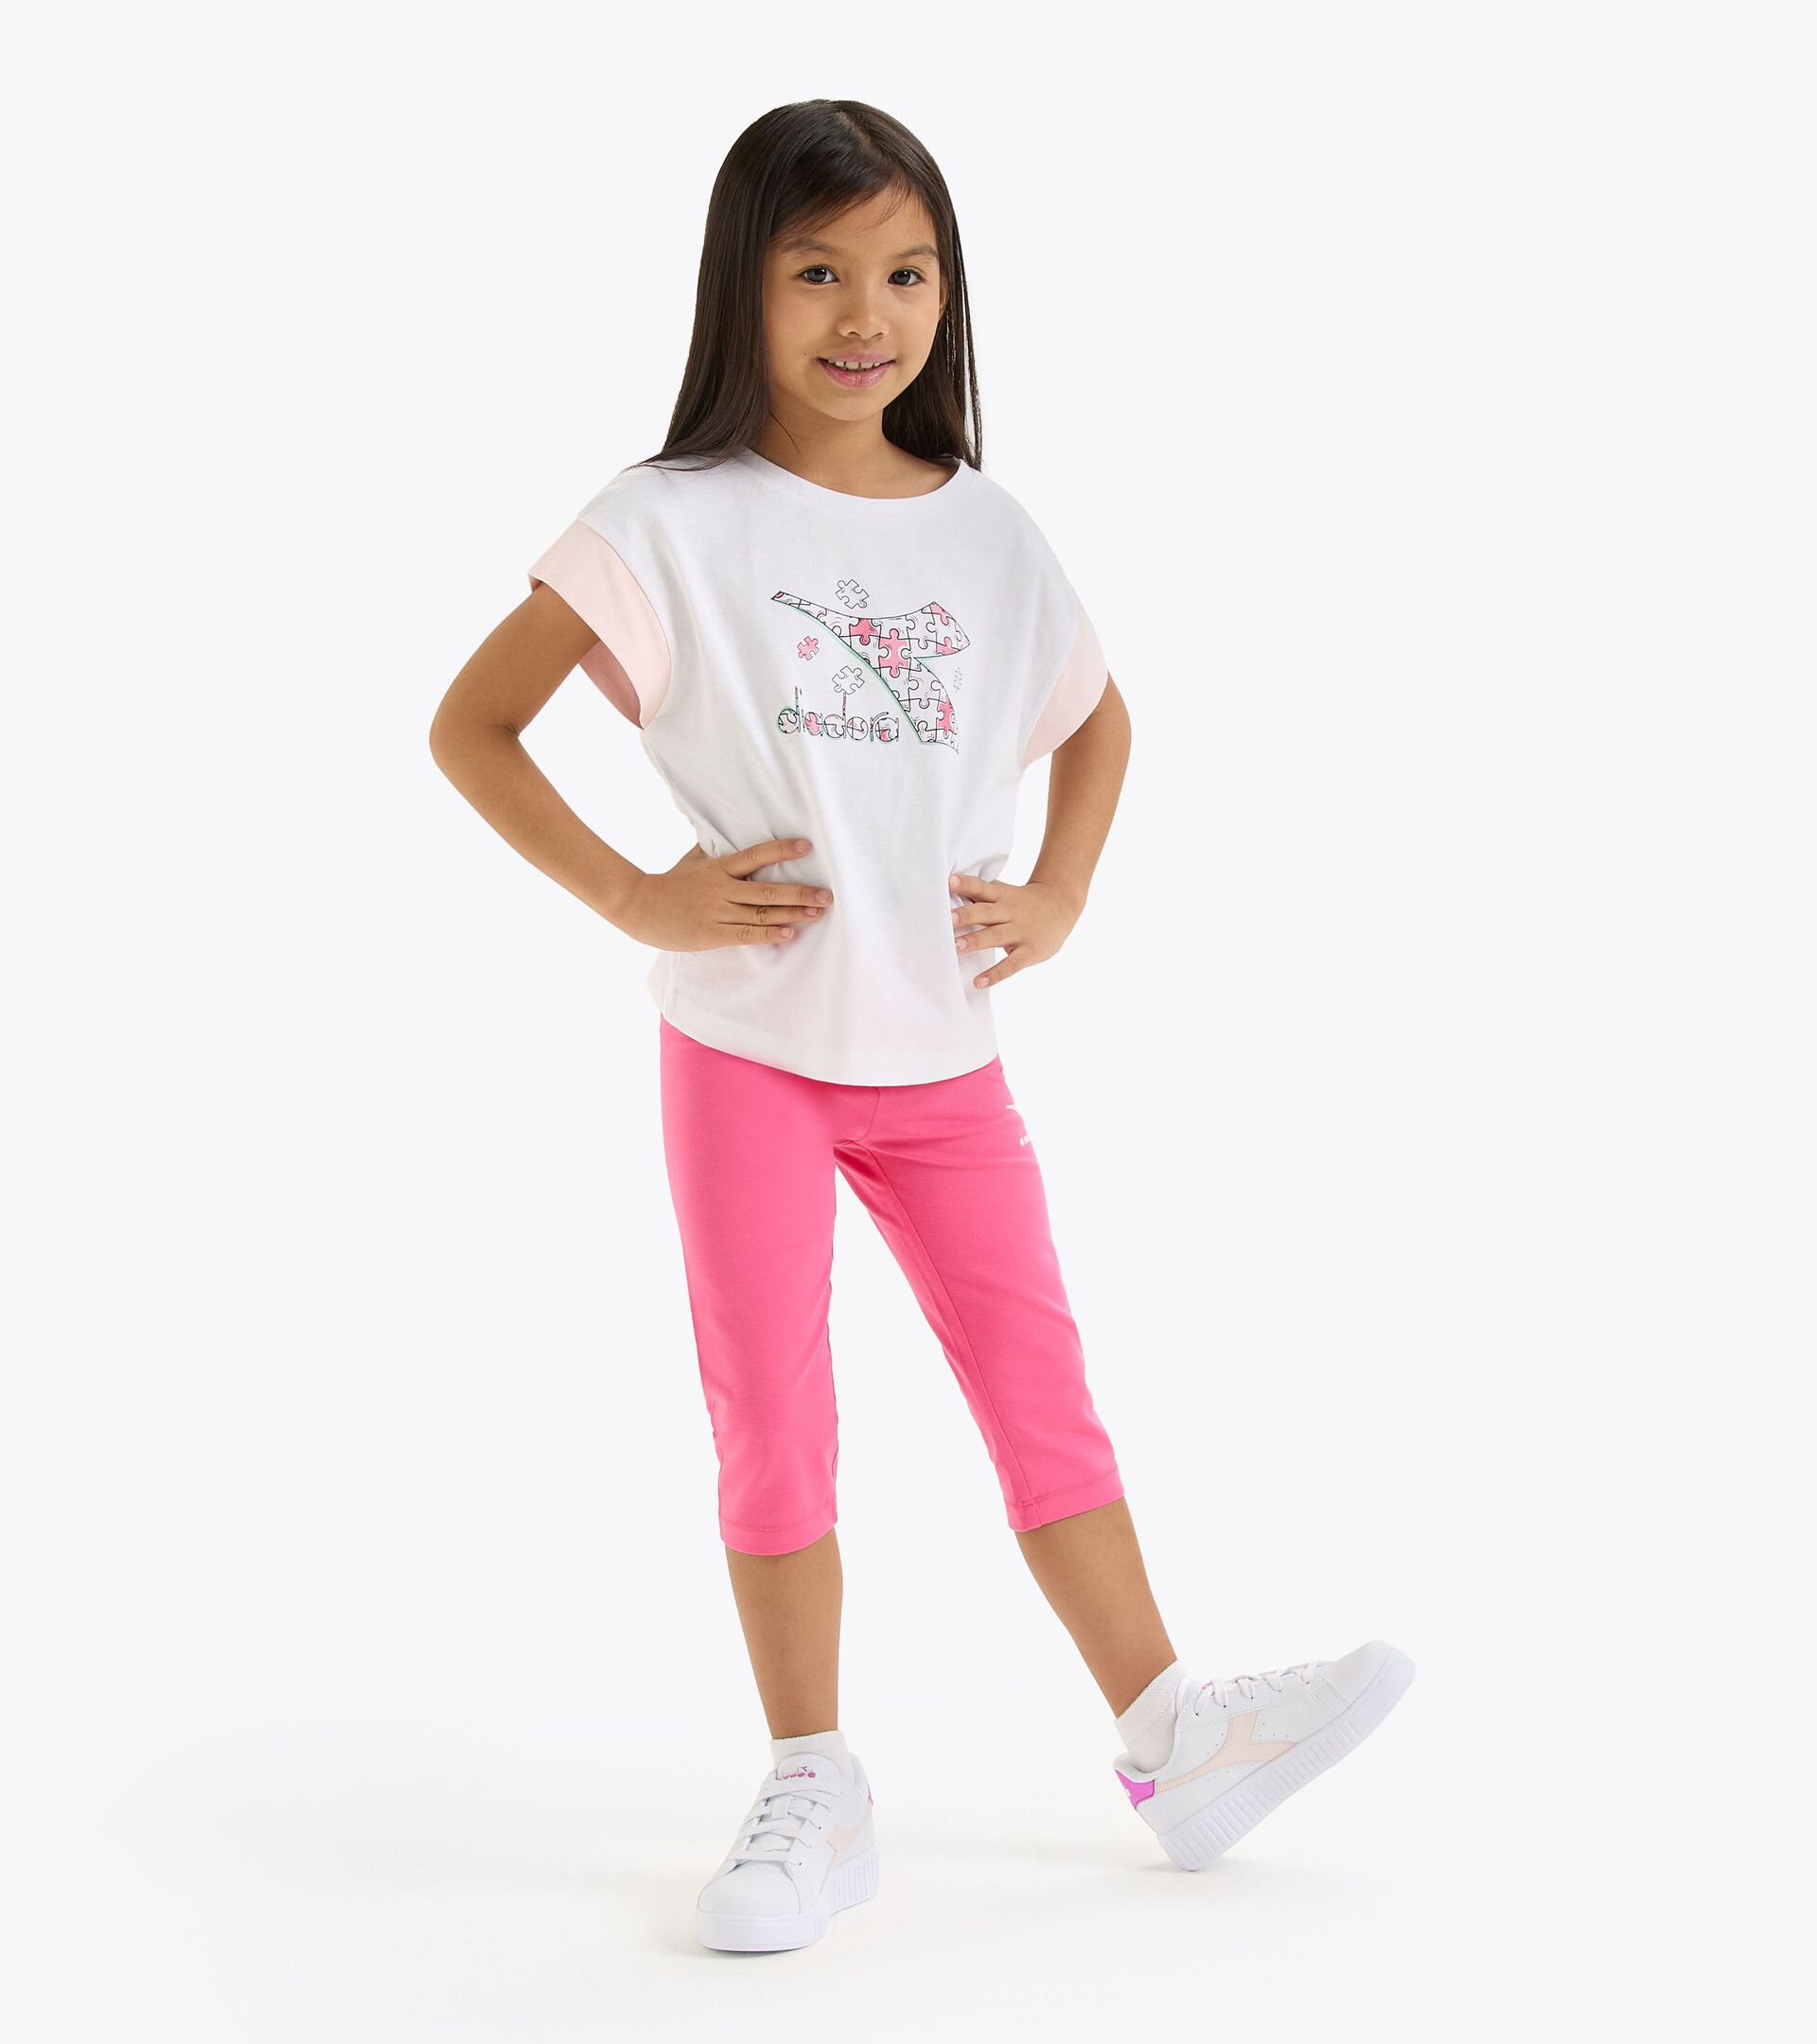 Sports set - T-shirt and leggings - Girl
 JG. SET SS PUZZLES SUPER WHITE/WILD ROSE - Diadora